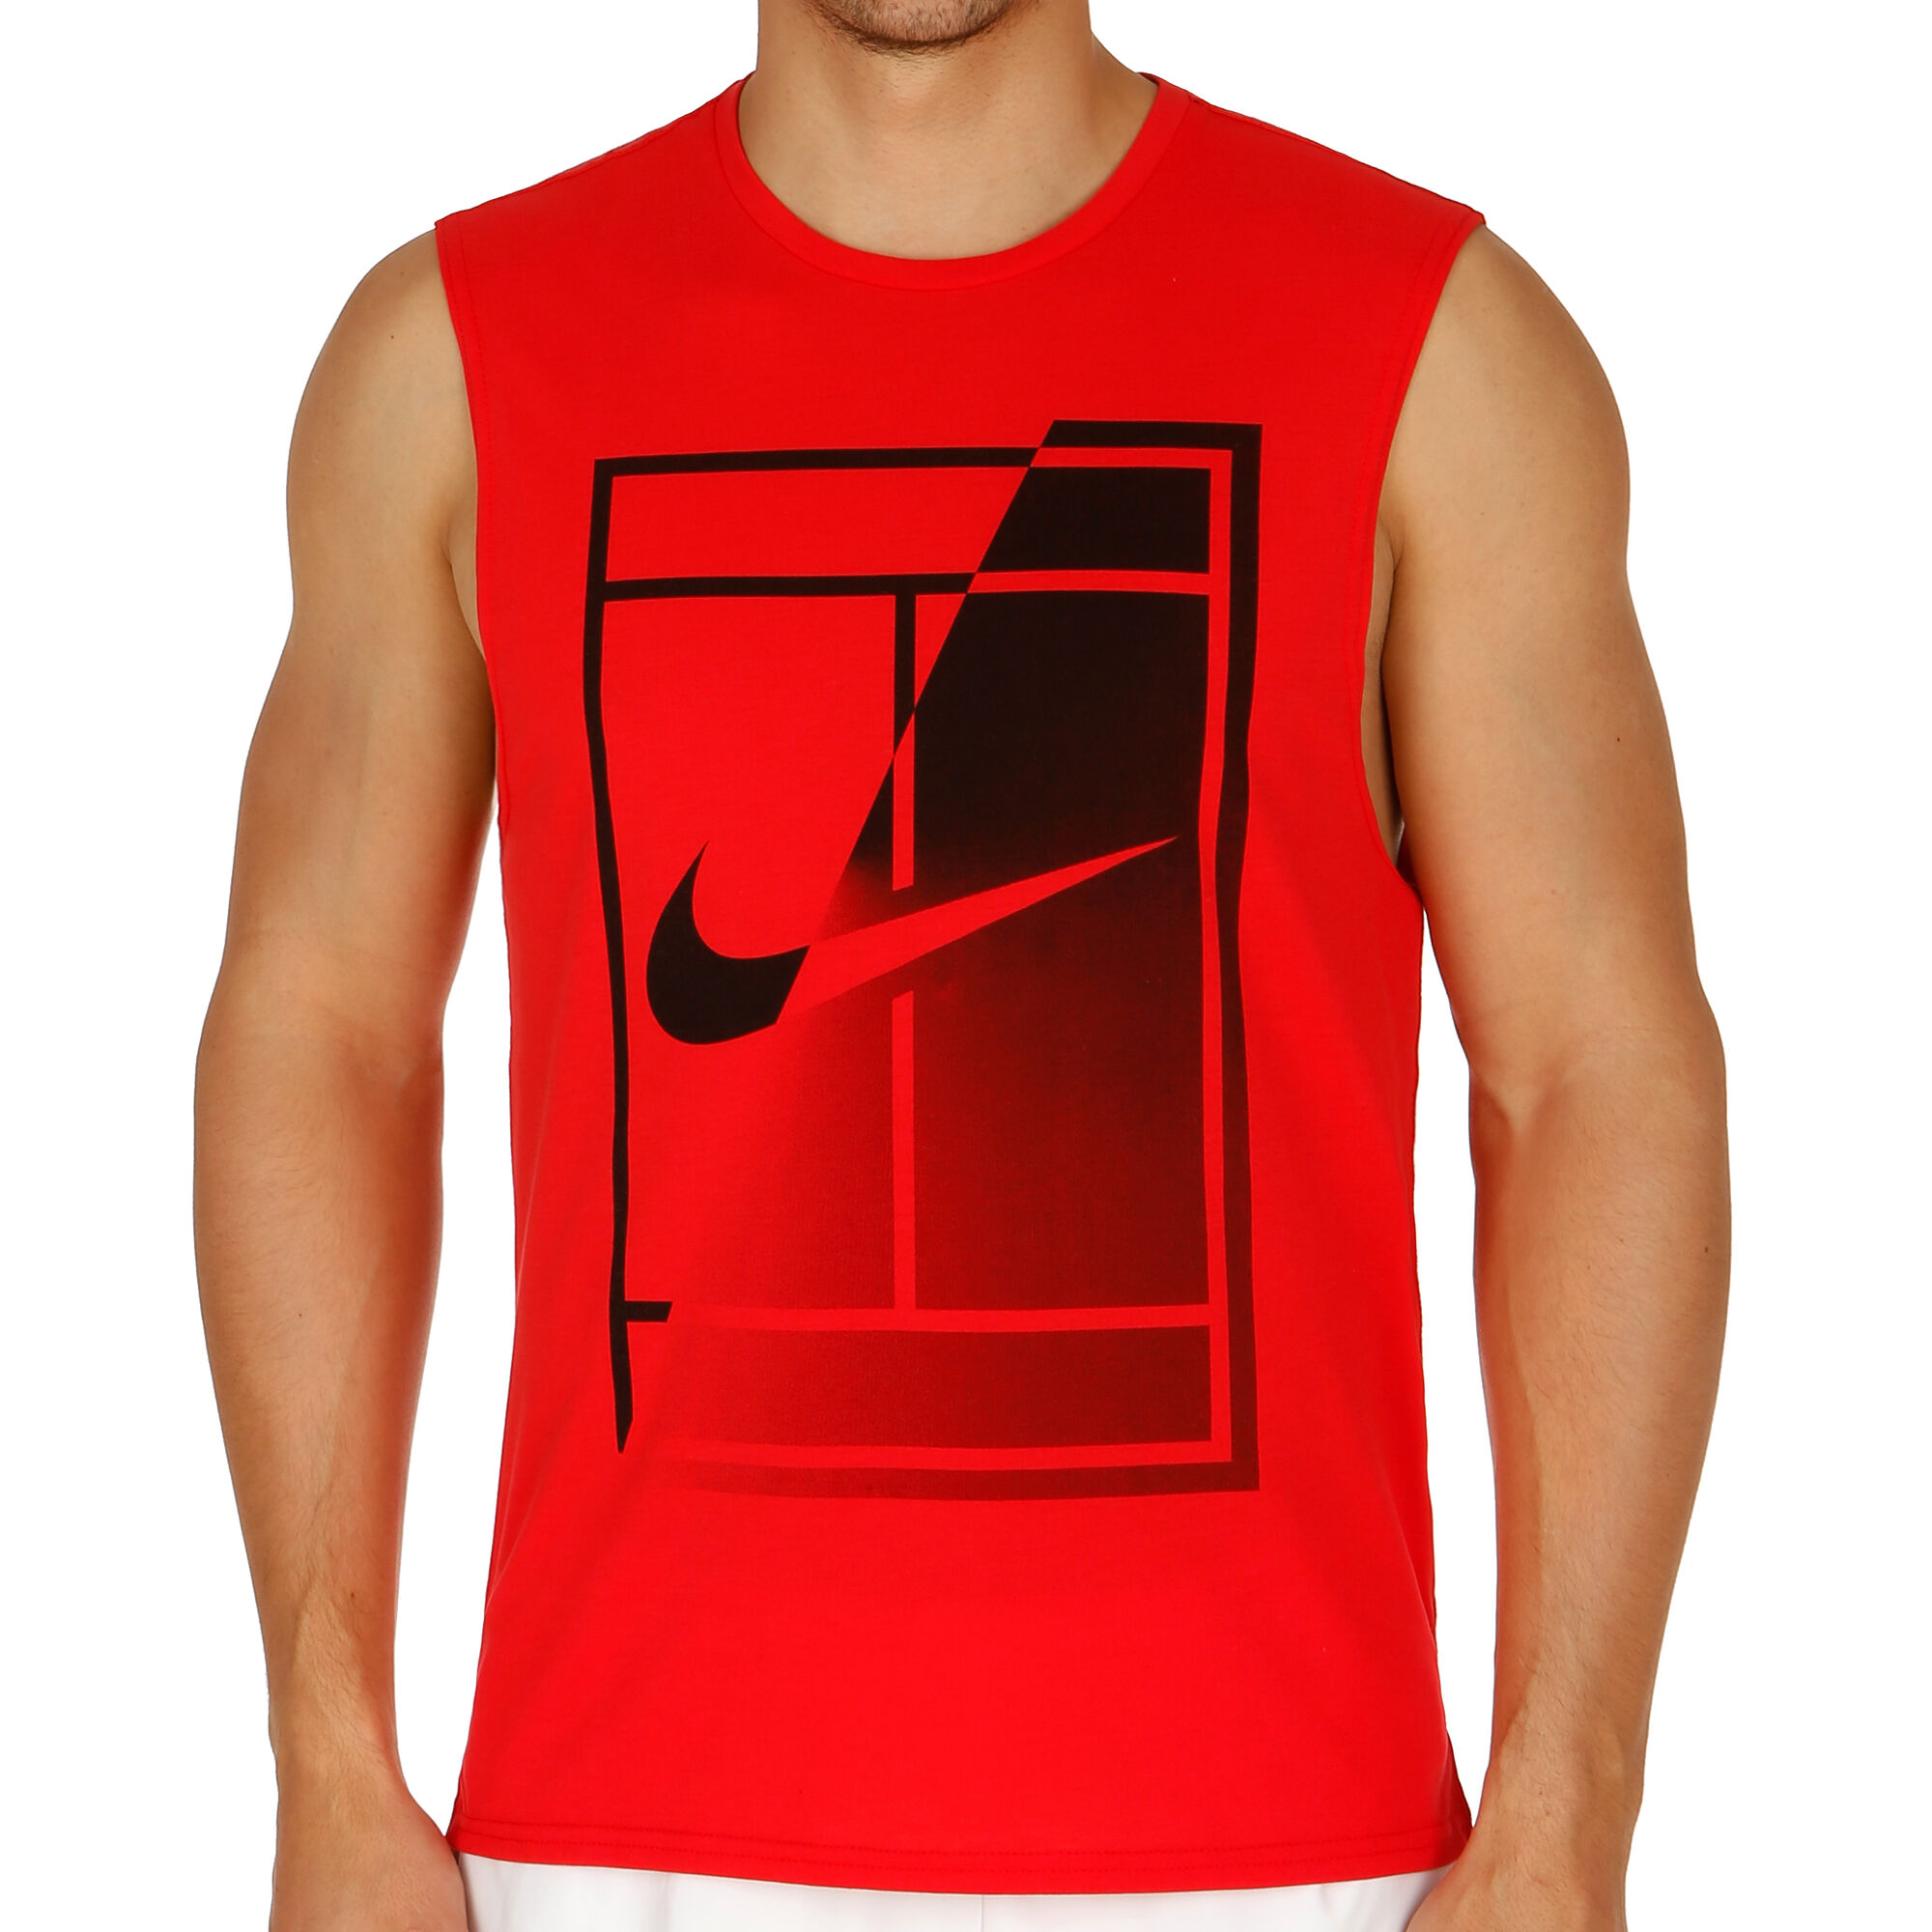 Nike Tank Top Men - Red, Black online | Tennis-Point